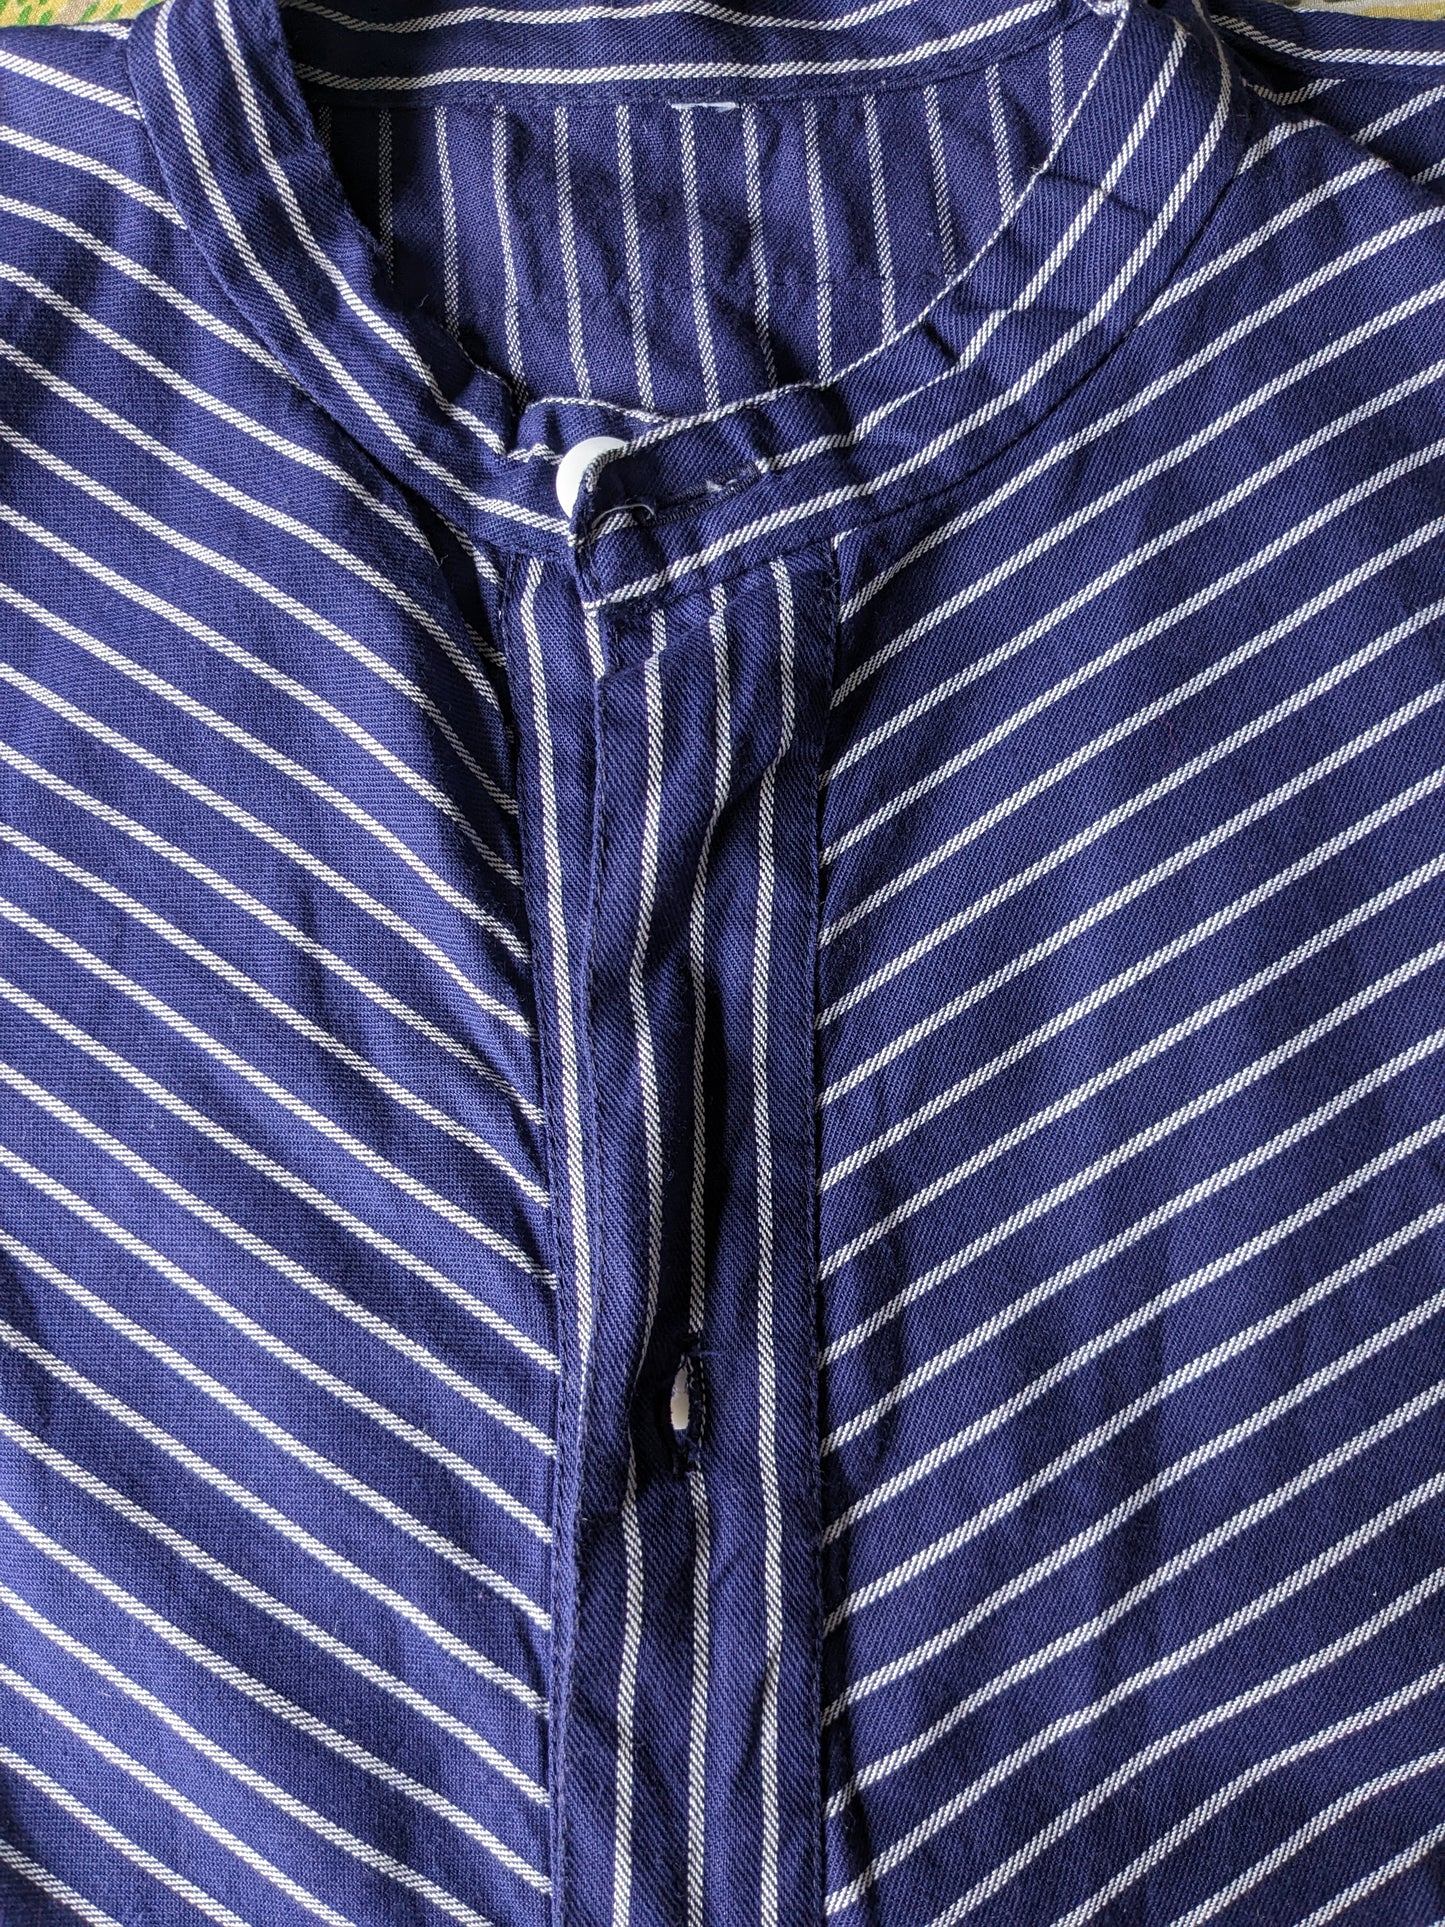 Suéter / camisa de polo vintage con collar elevado / agricultores / mao. Blanco azul rayado. Tamaño xxl / 2xl